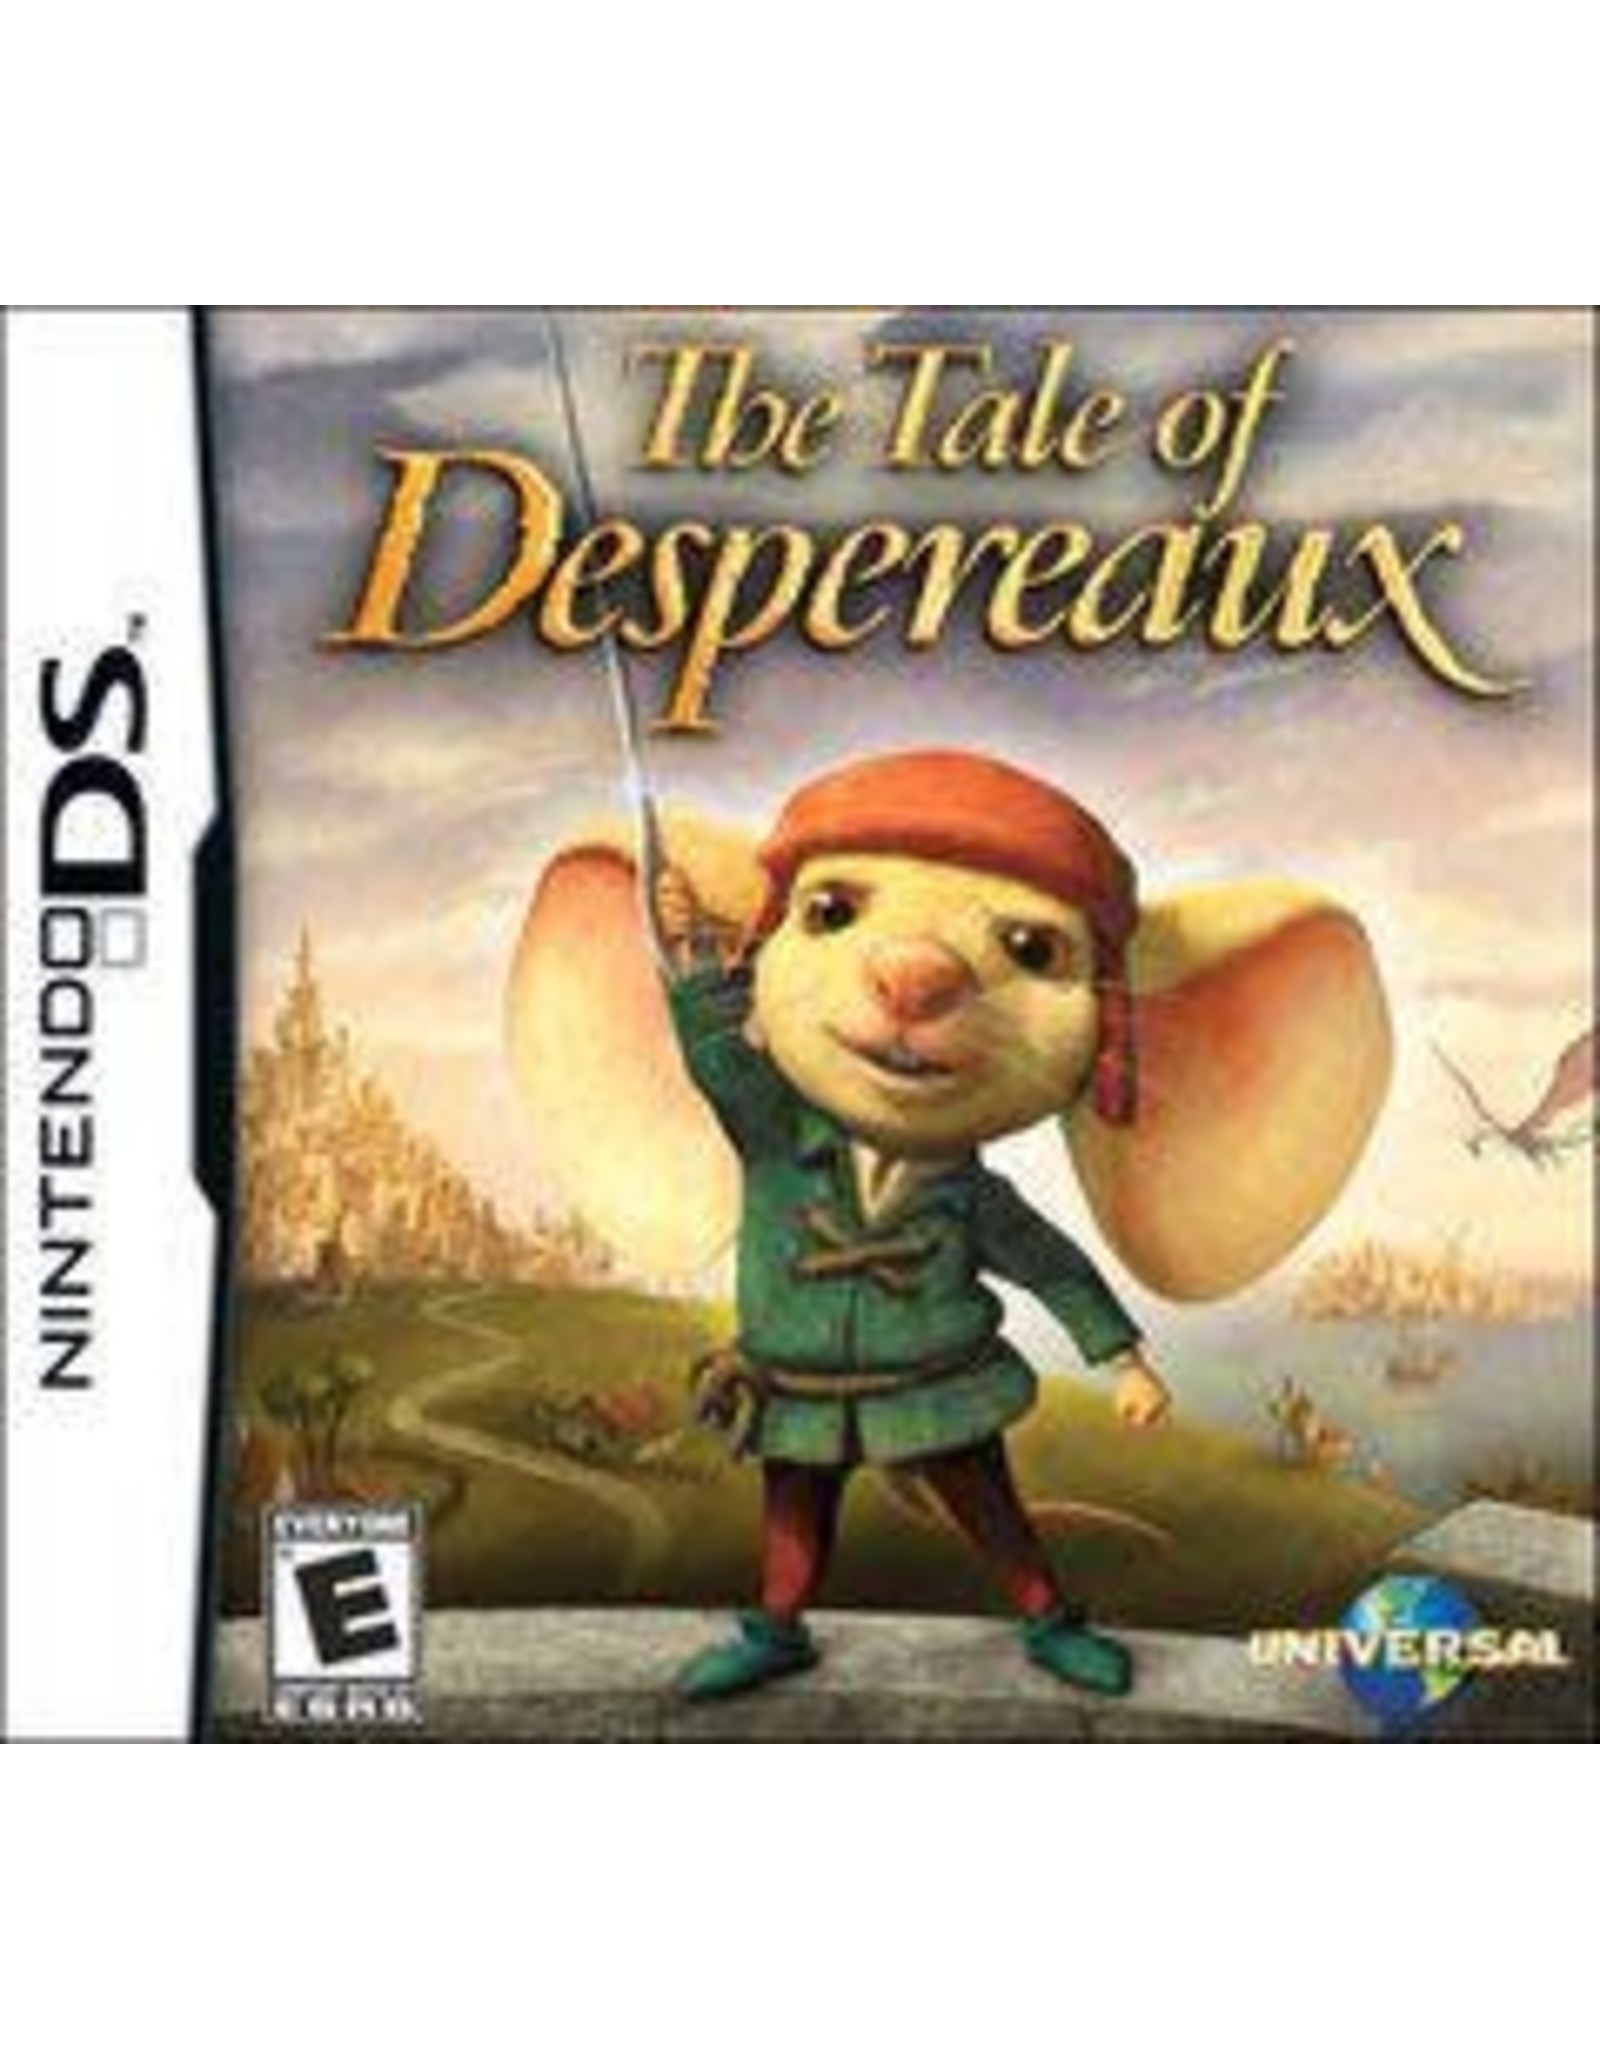 Nintendo DS The Tale of Despereaux